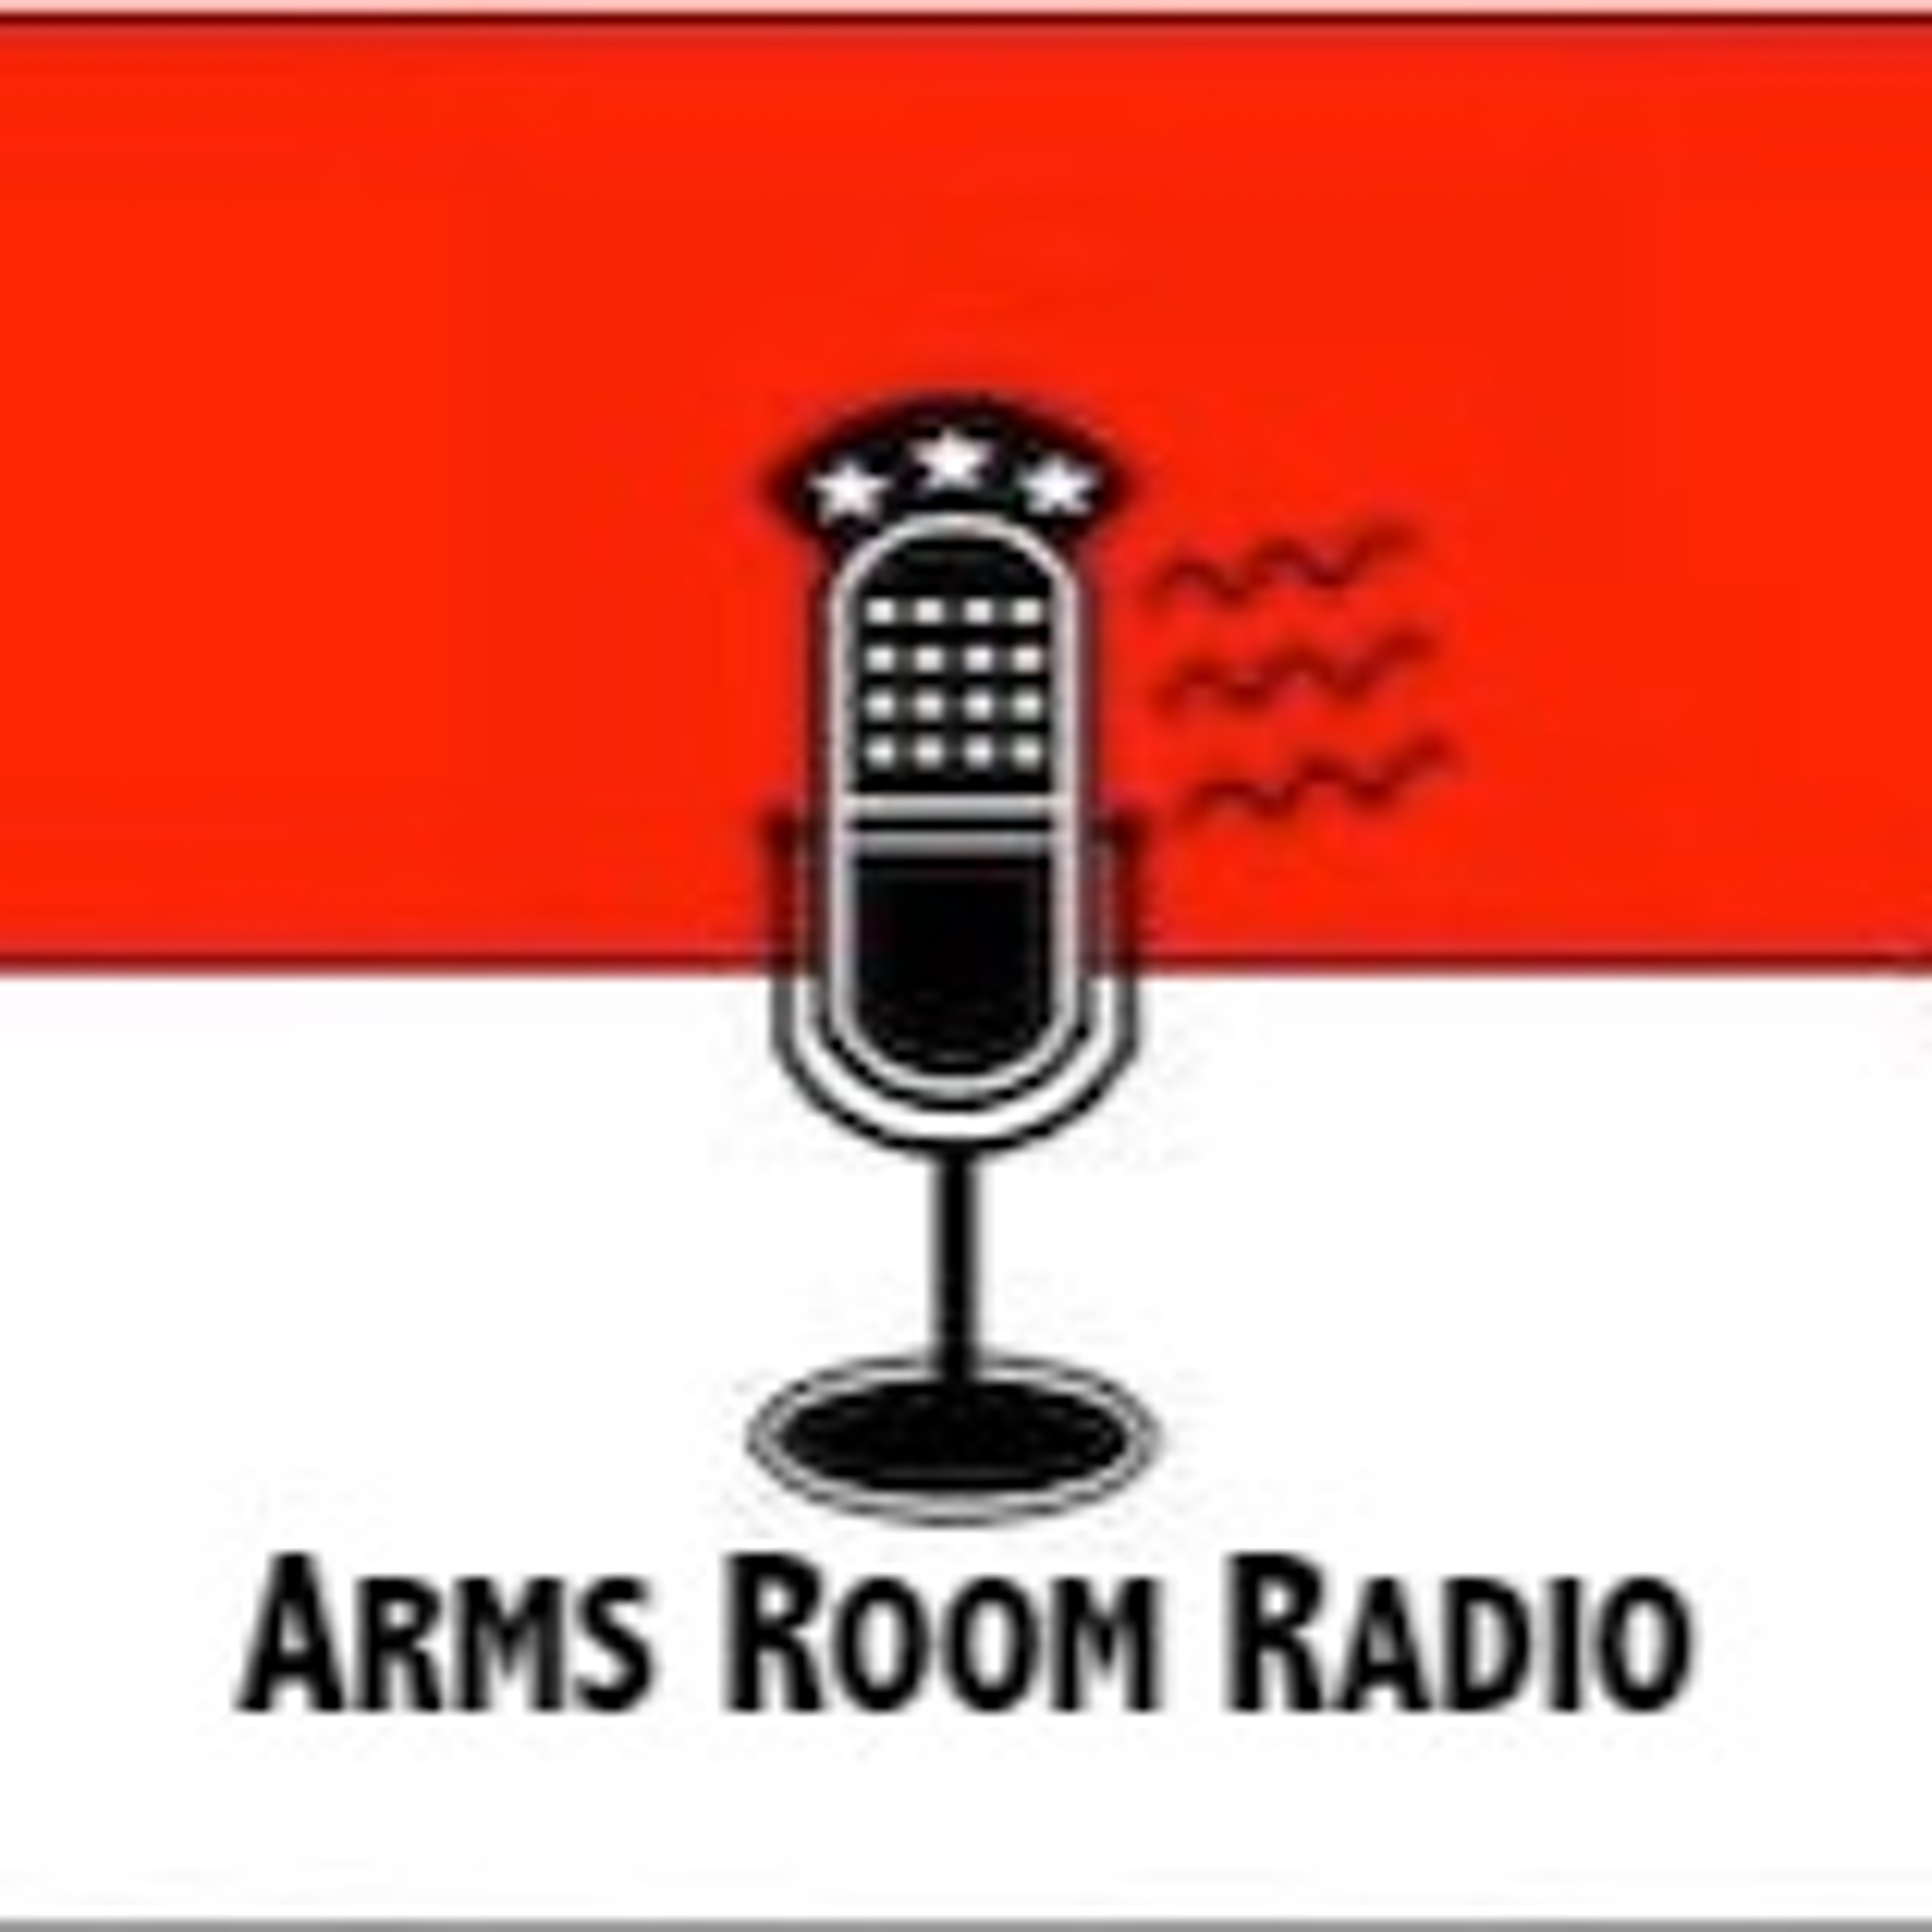 ArmsRoomRadio 01.16.21 Craig DeLuz and Florida Woman